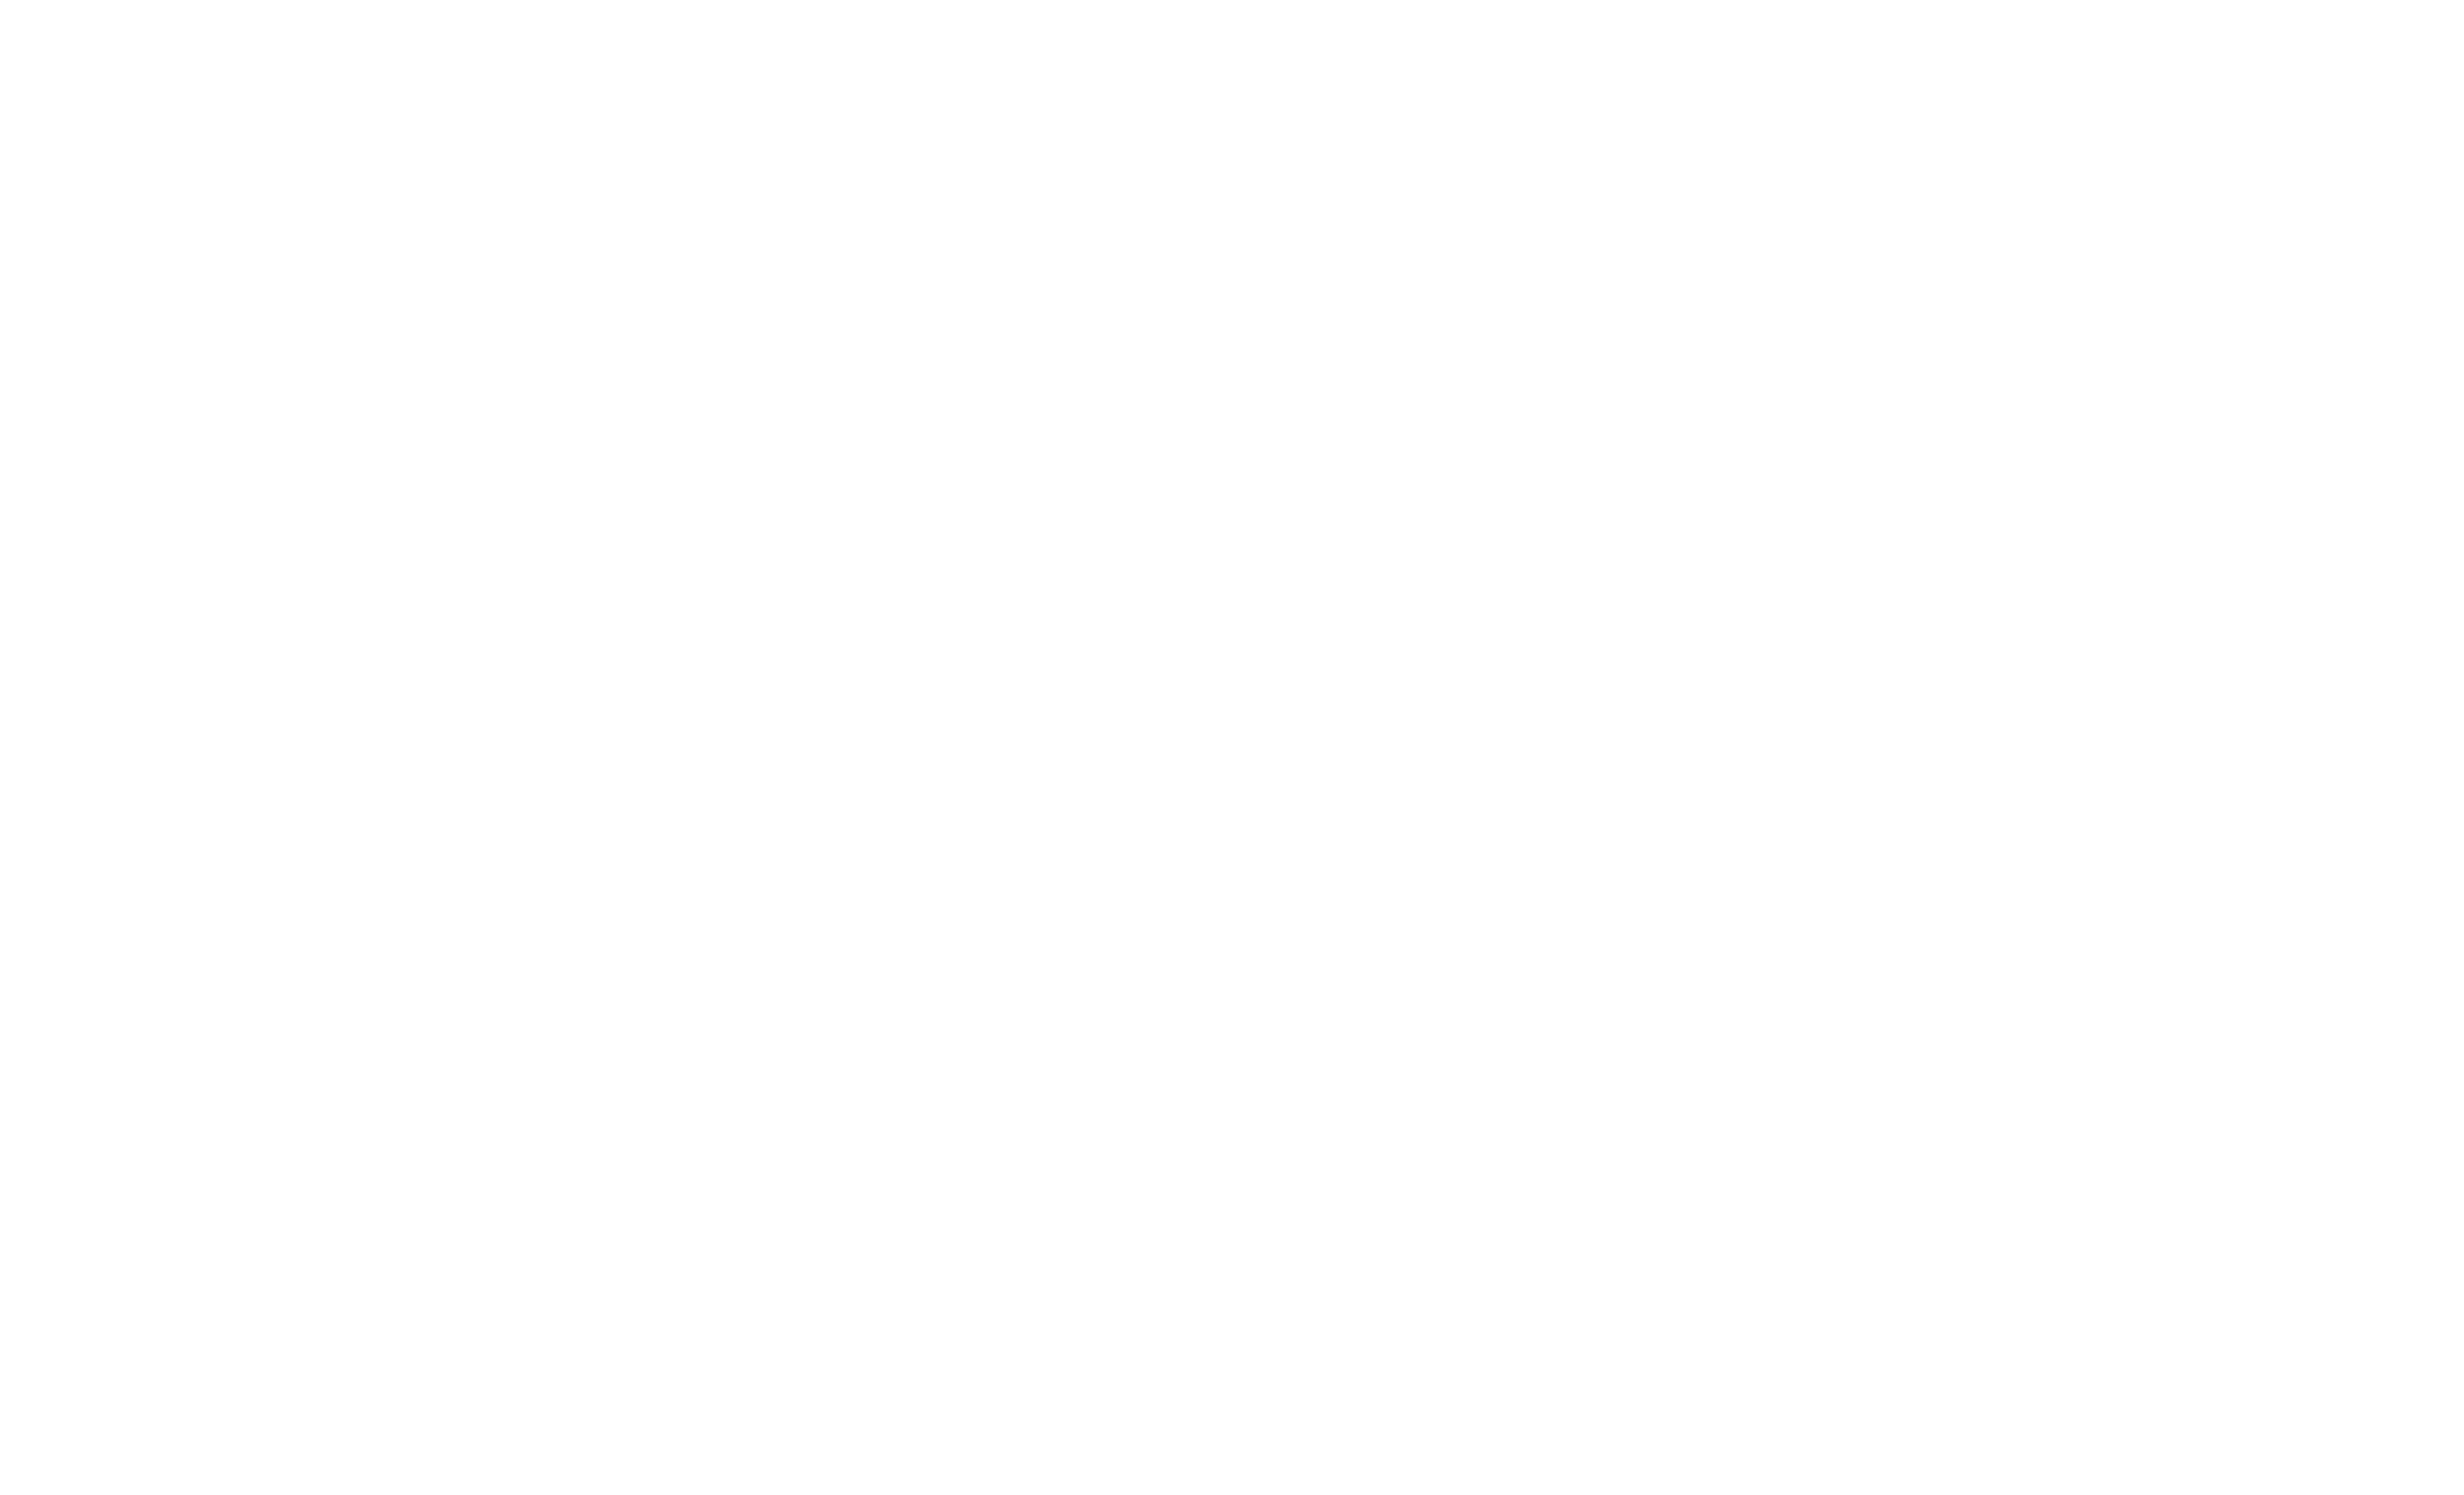 Cubitt House, London Pubs